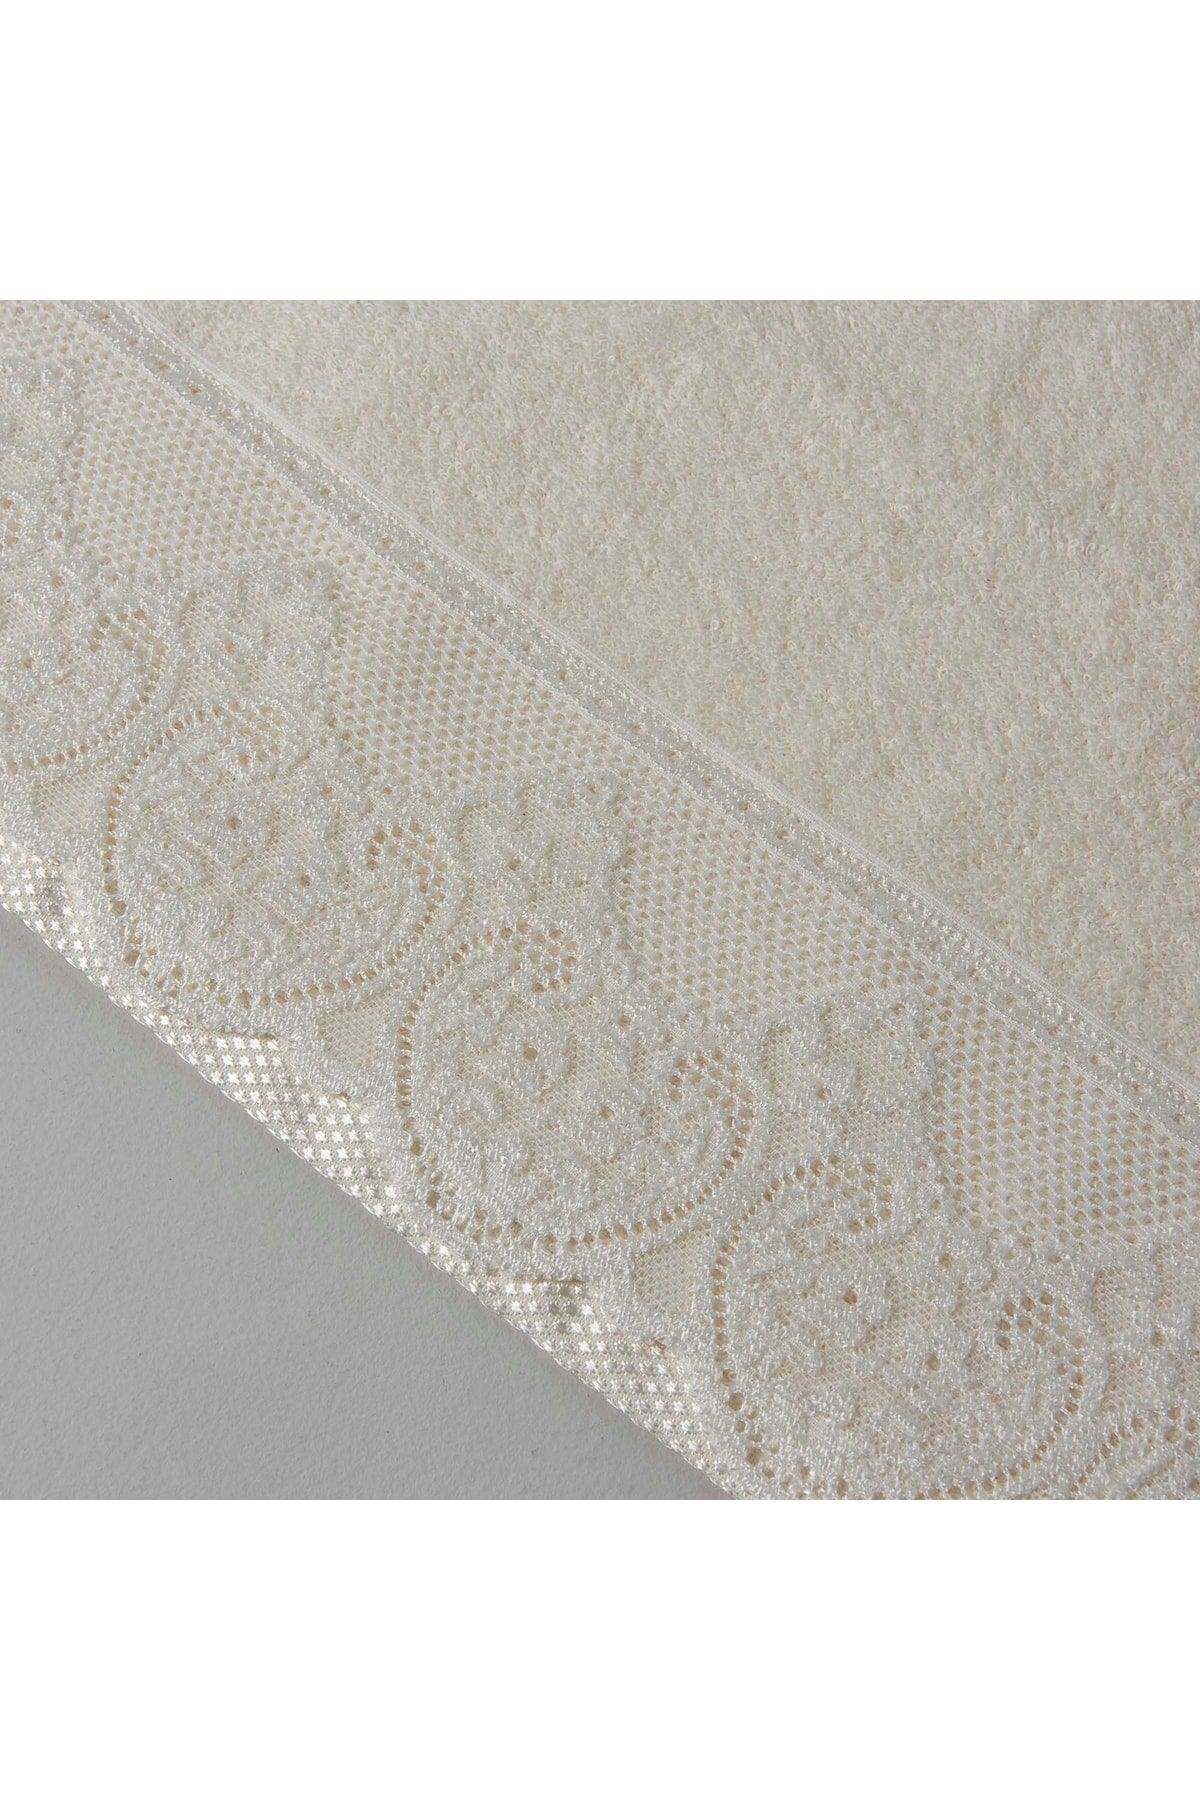 Lace Cotton 50x80 Cm Face Towel Ecru - Swordslife